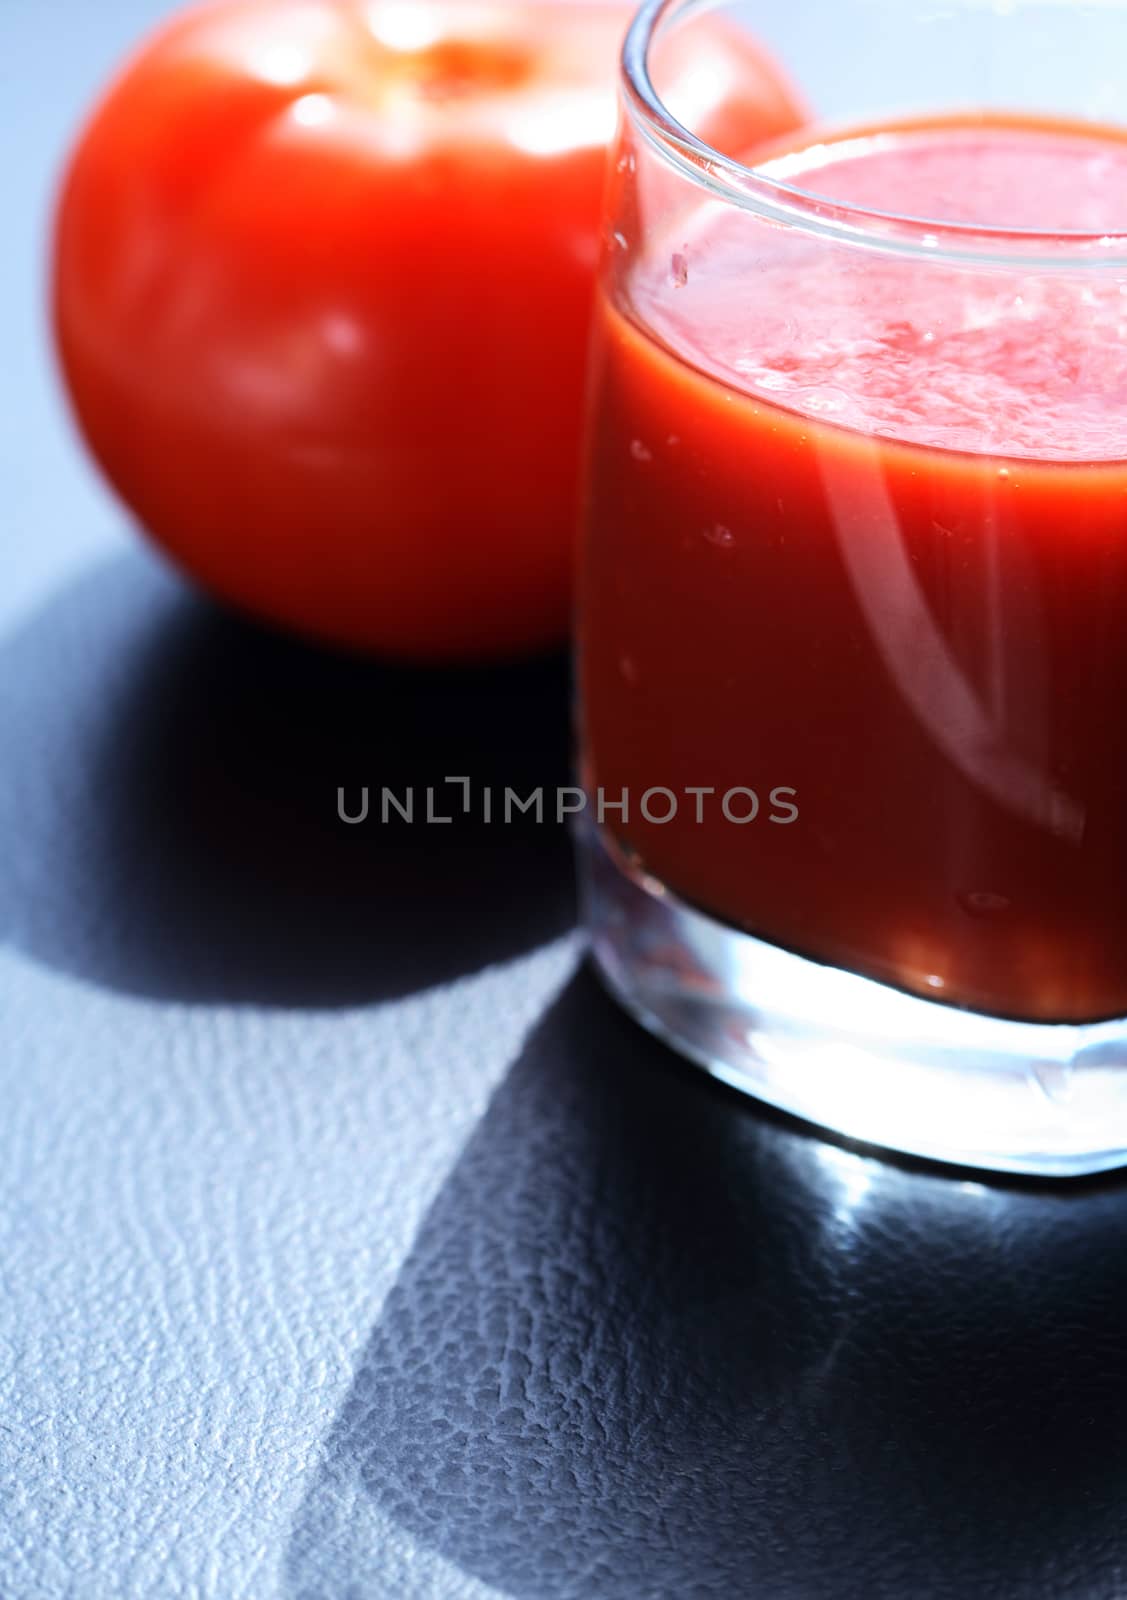 Full glass of tomato juice near freshness tomato